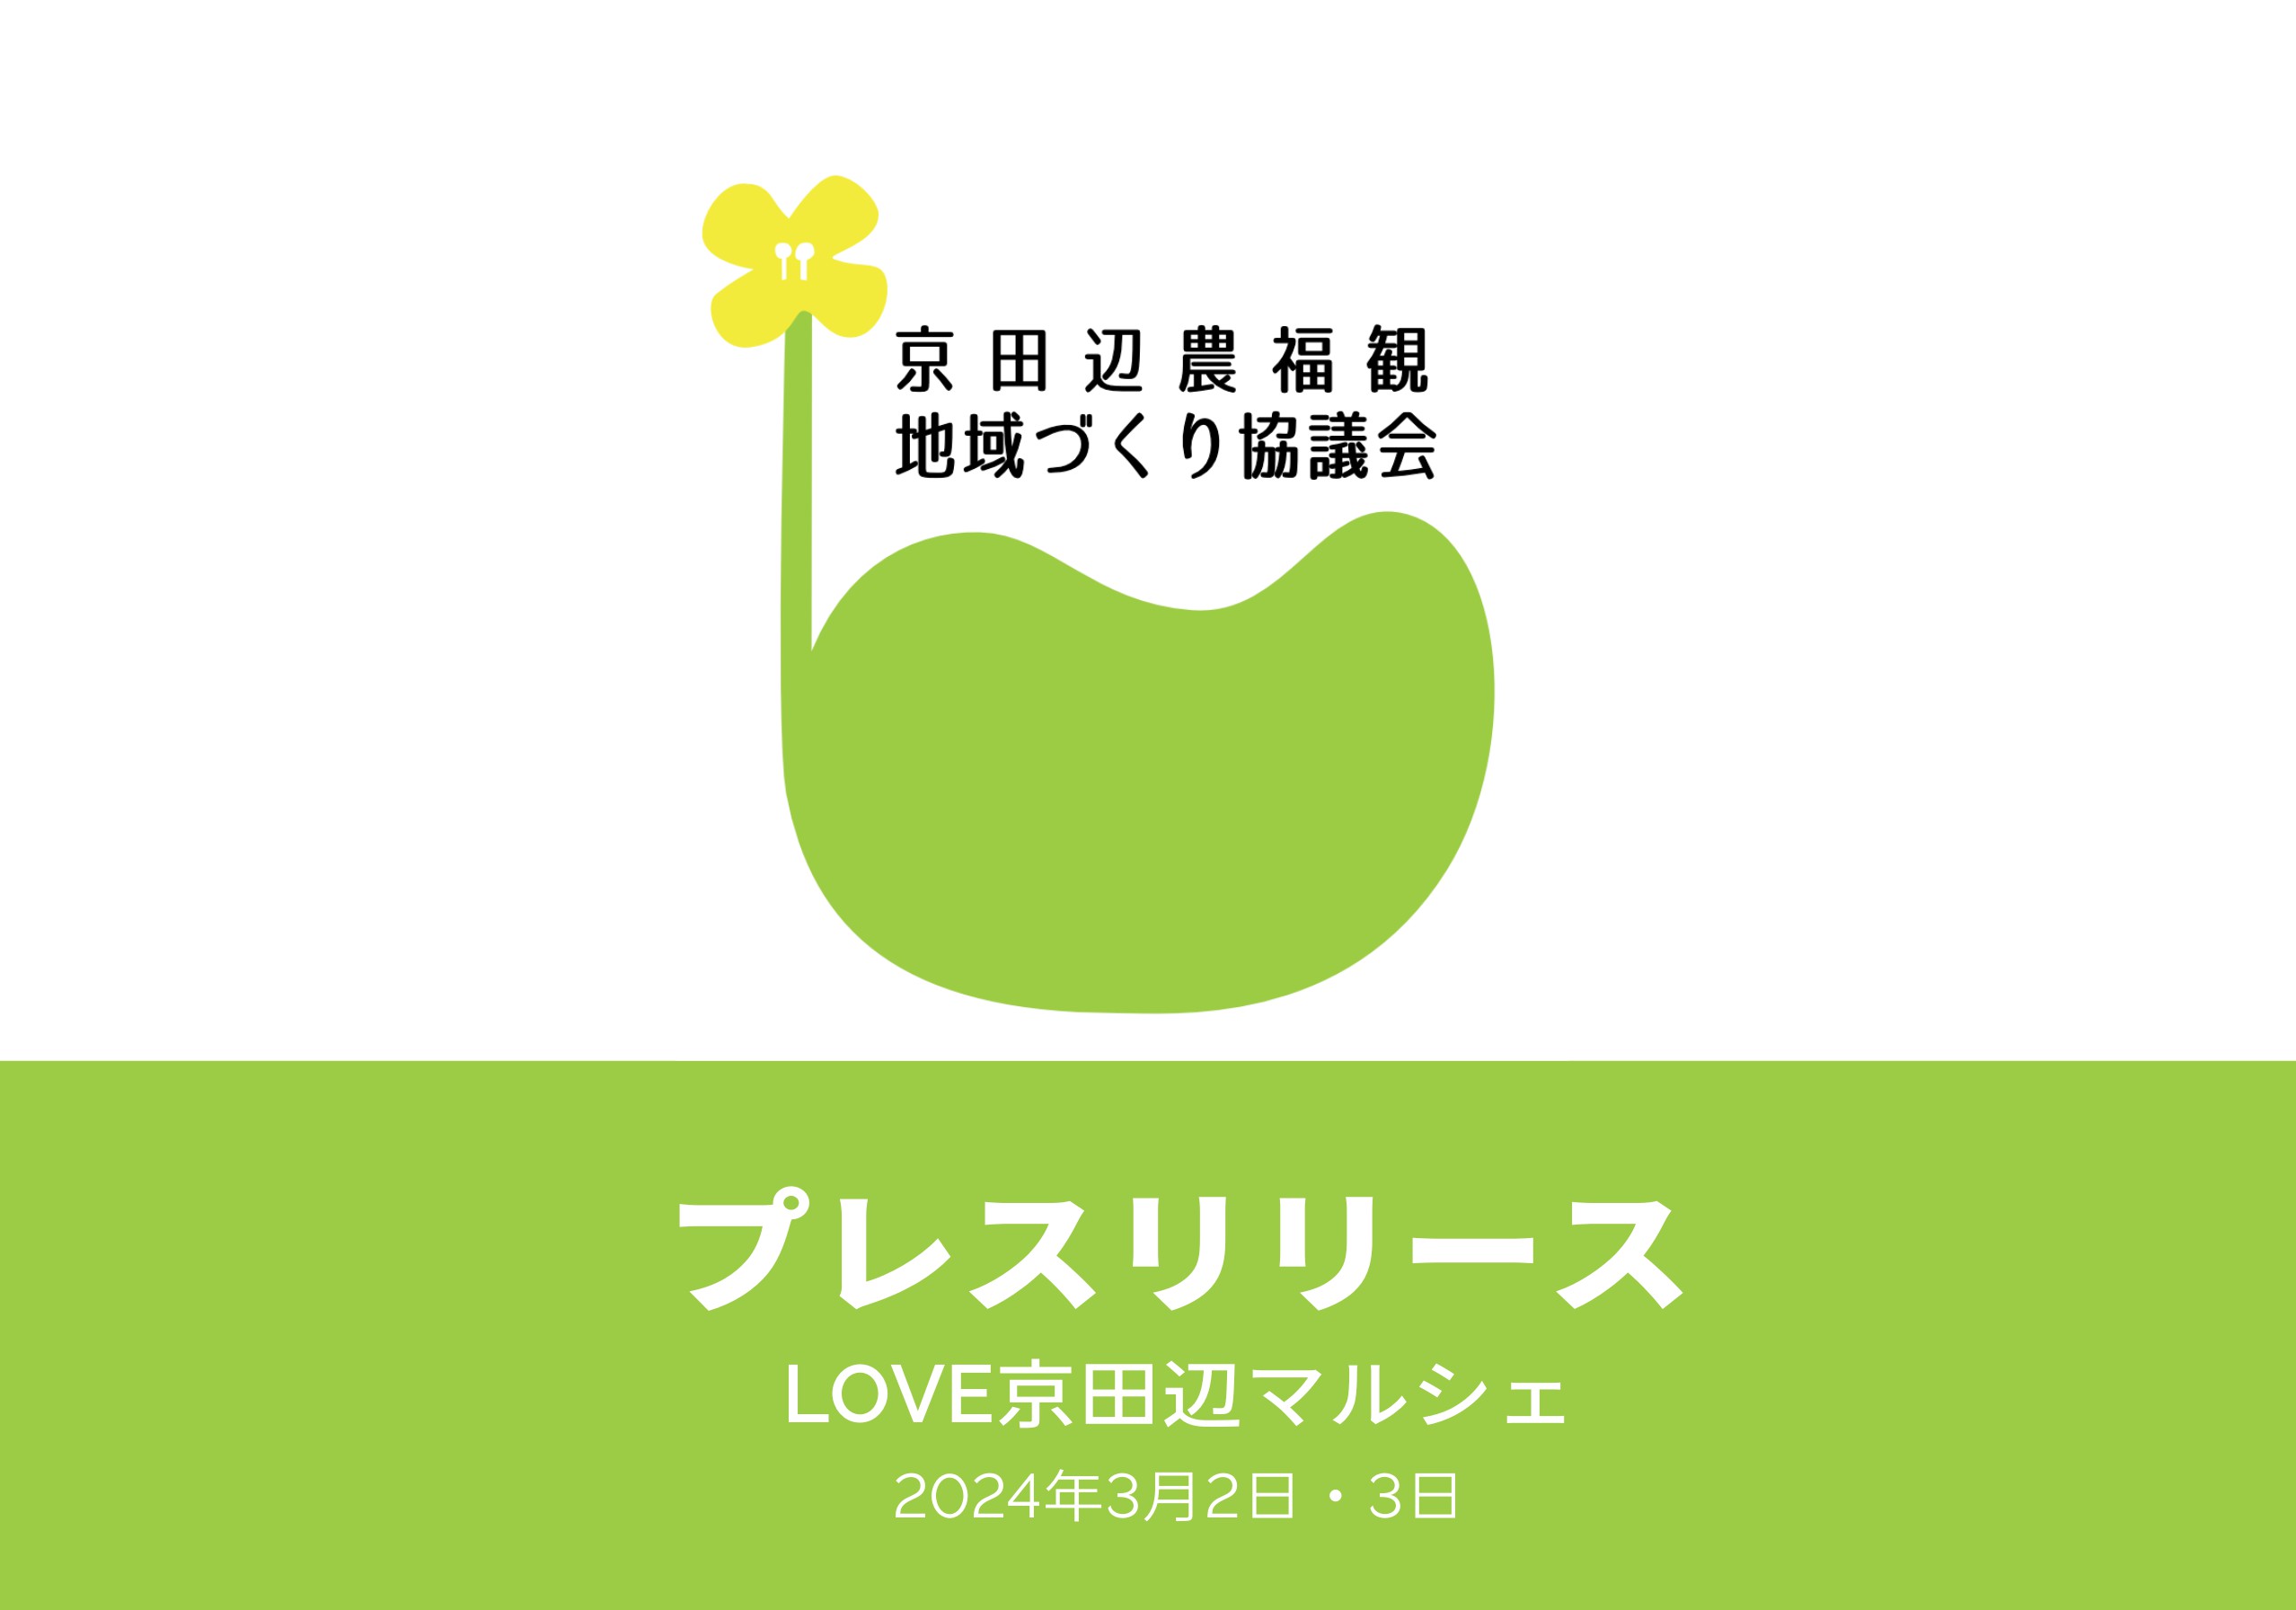 Love京田辺マルシェ メディア様向けプレスリリースの画像